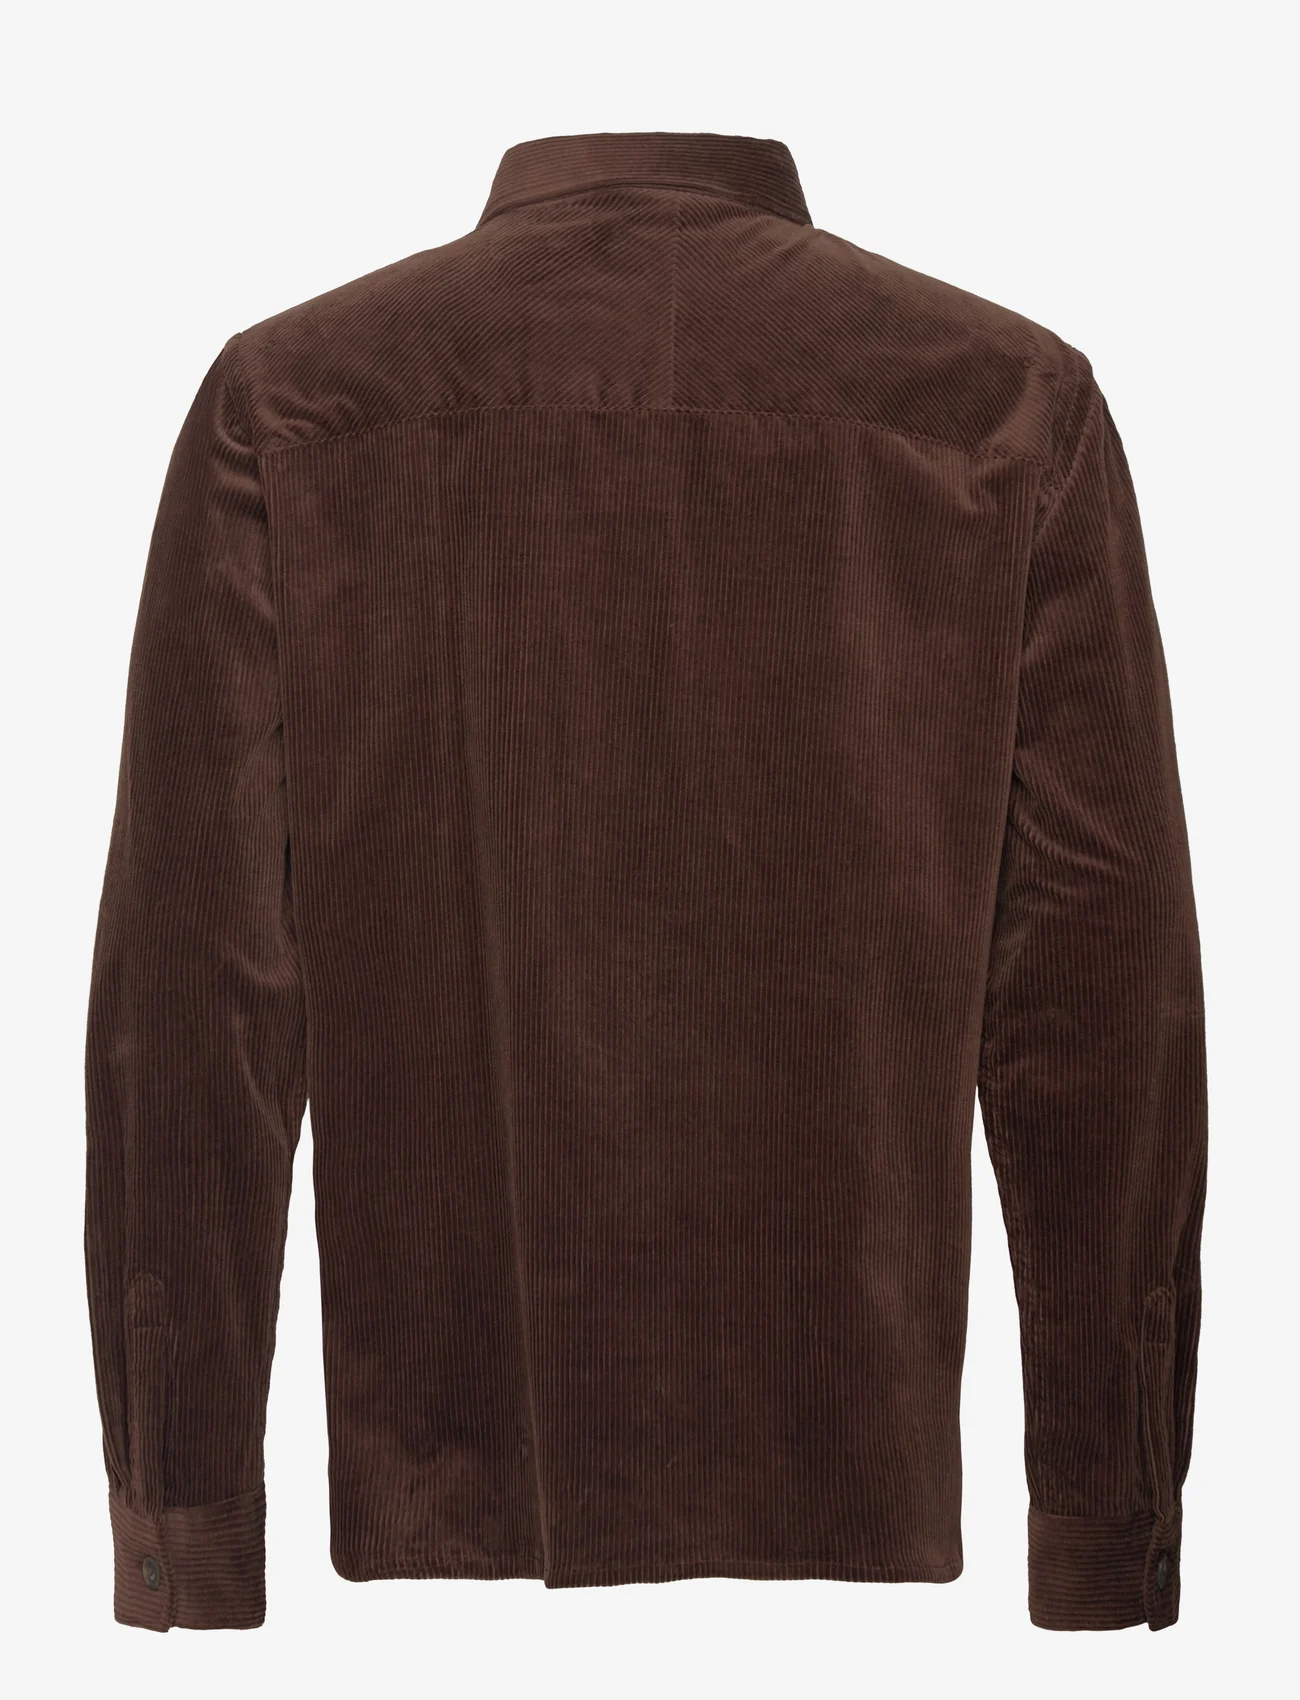 Mango - Corduroy pockets overshirt - män - brown - 1